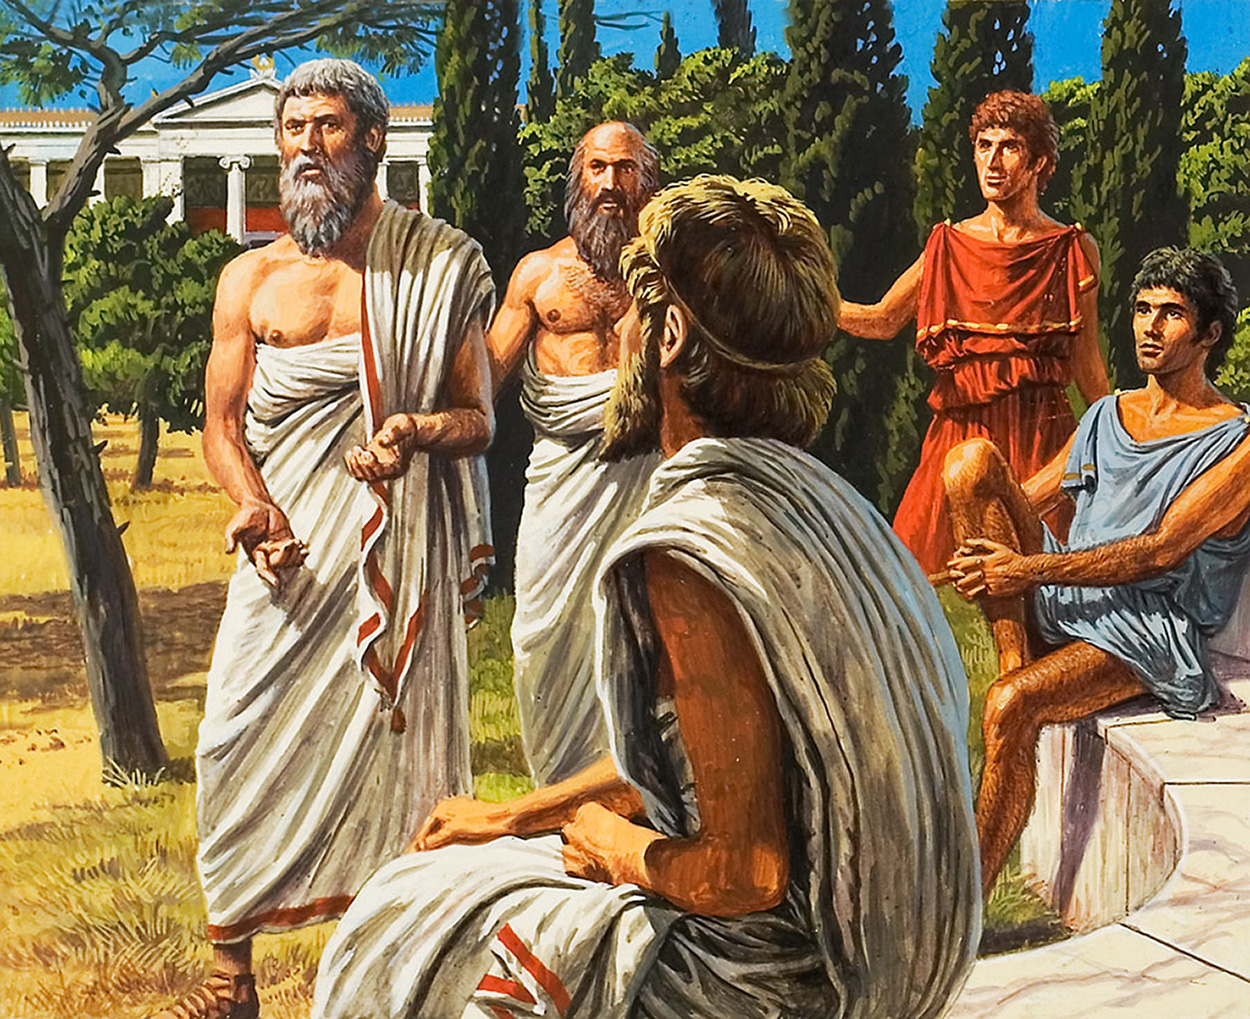 Plato (Original) art by Ancient History (Payne) at The Illustration Art Gallery